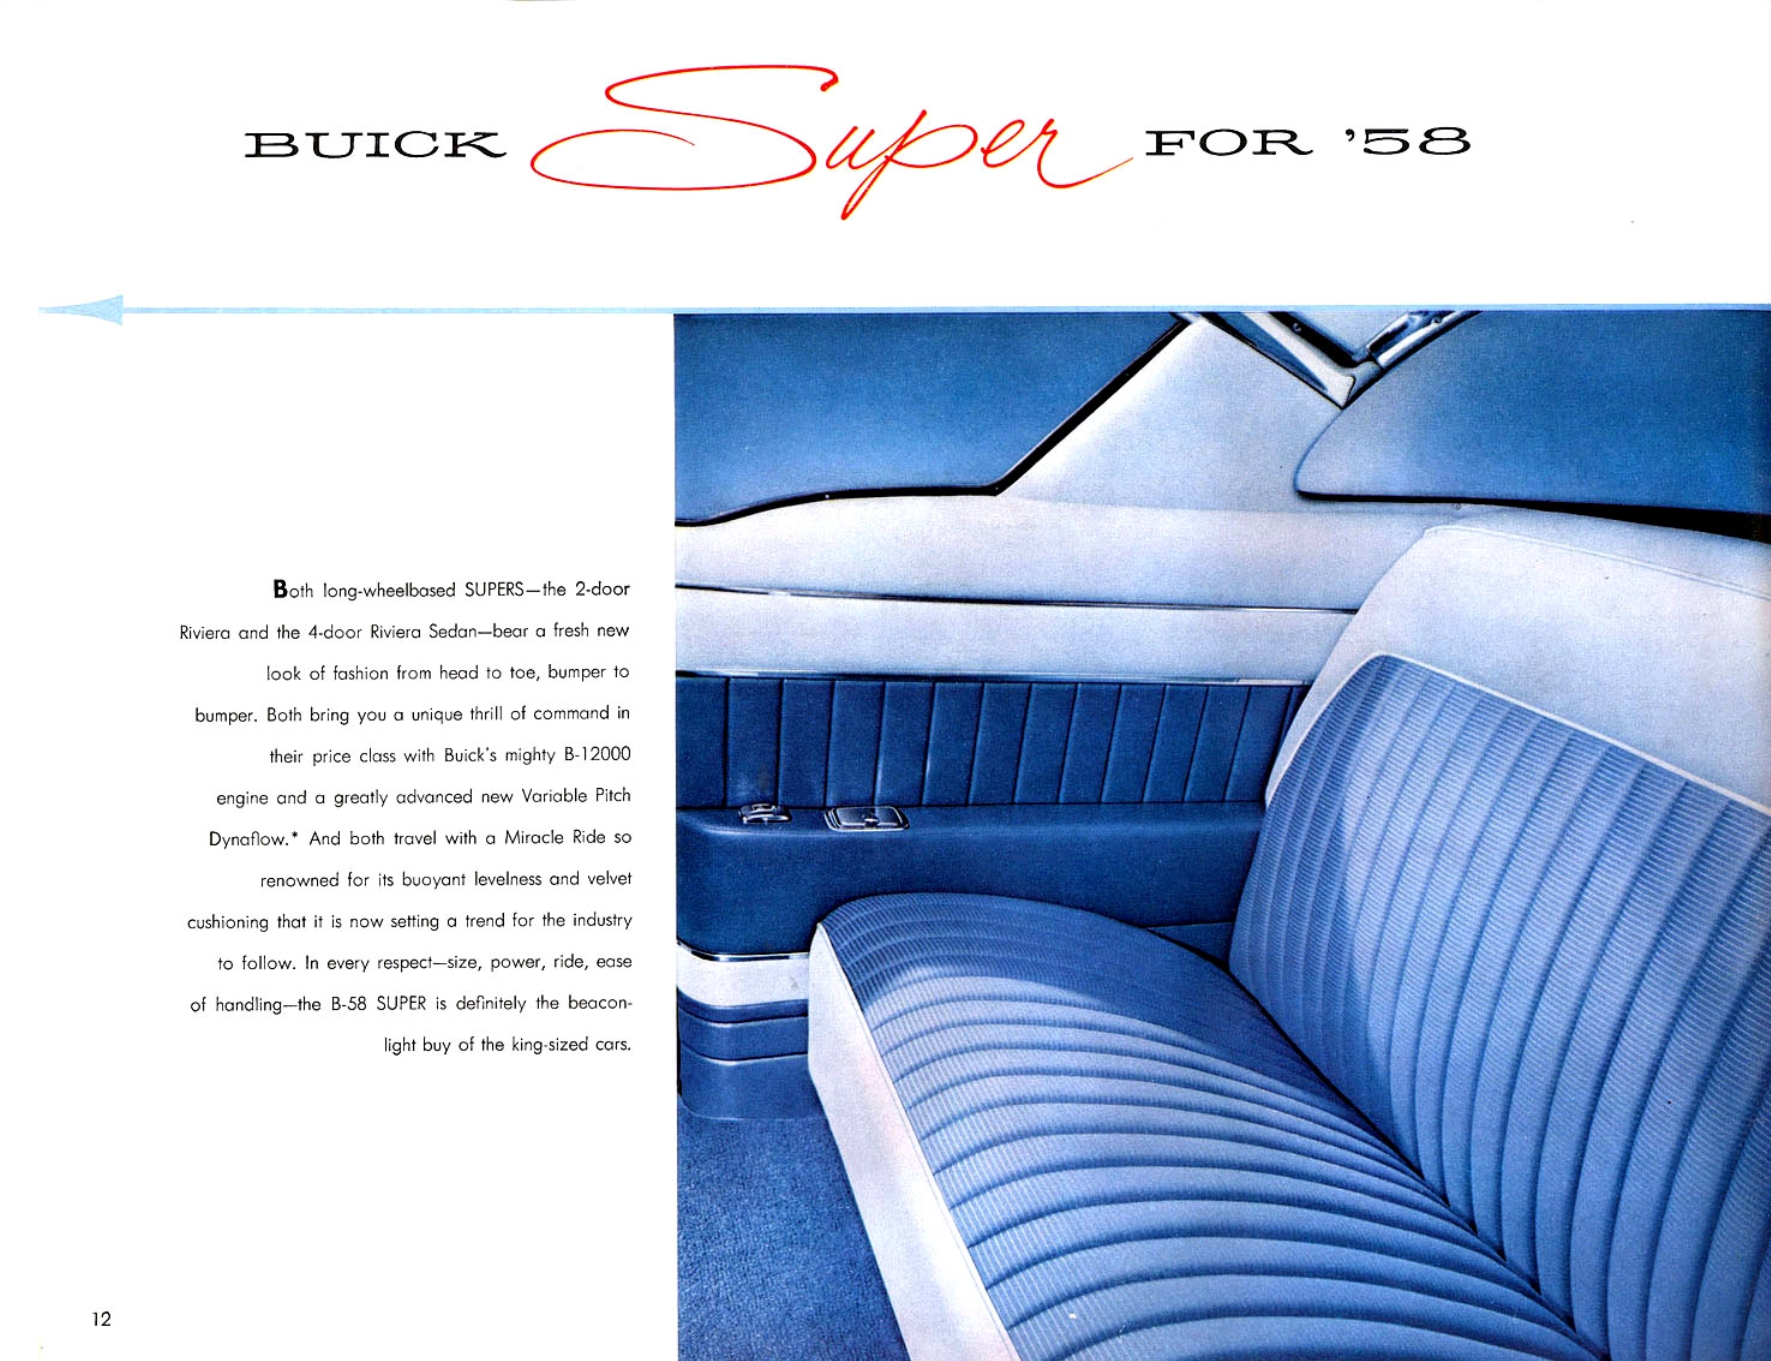 1958 Buick Prestige-12